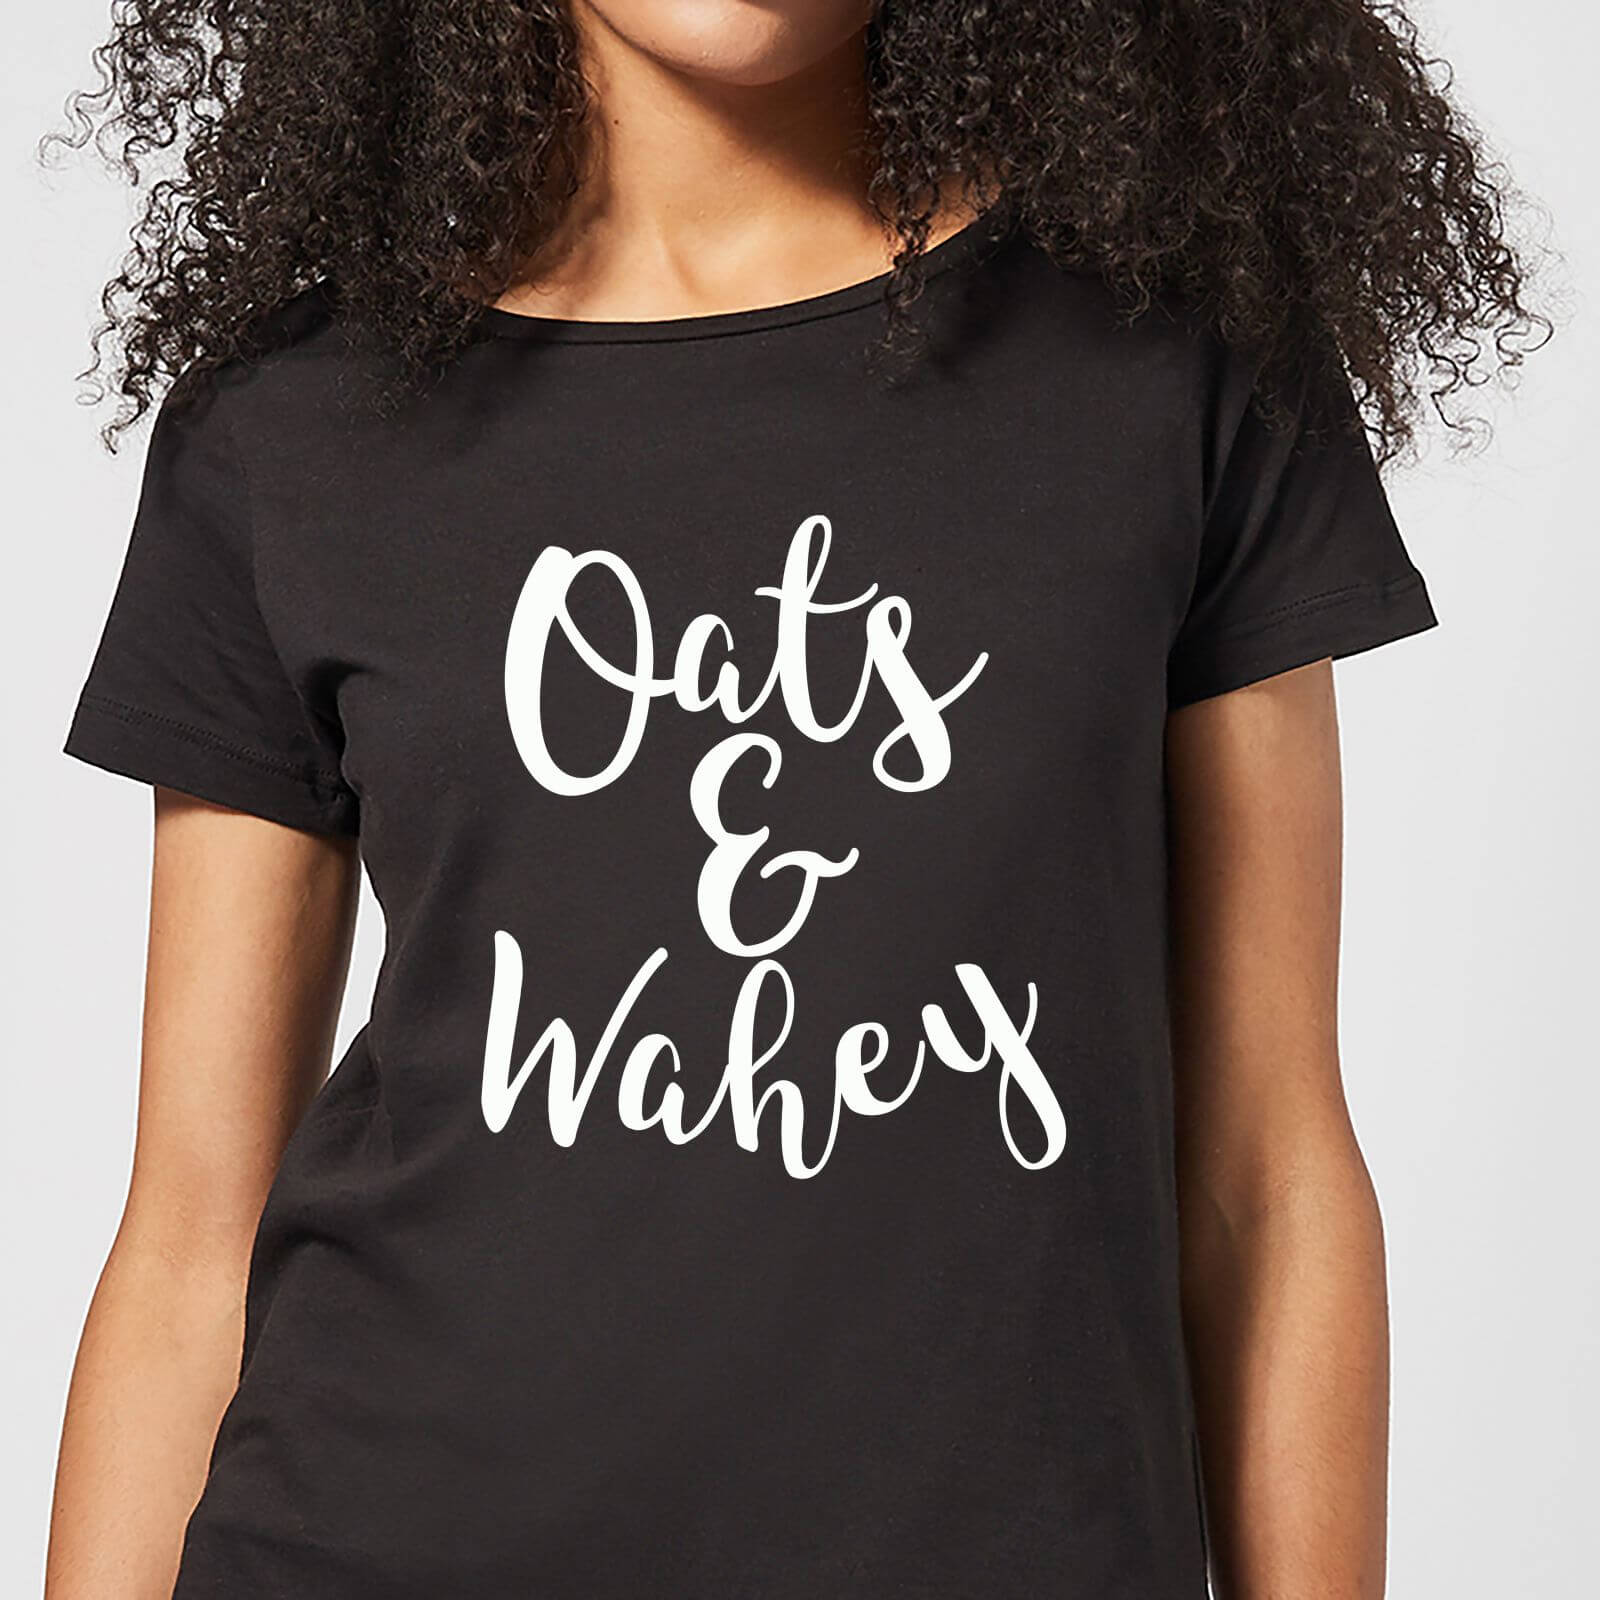 Oats and Wahey Women's T-Shirt - Black - 3XL - Black